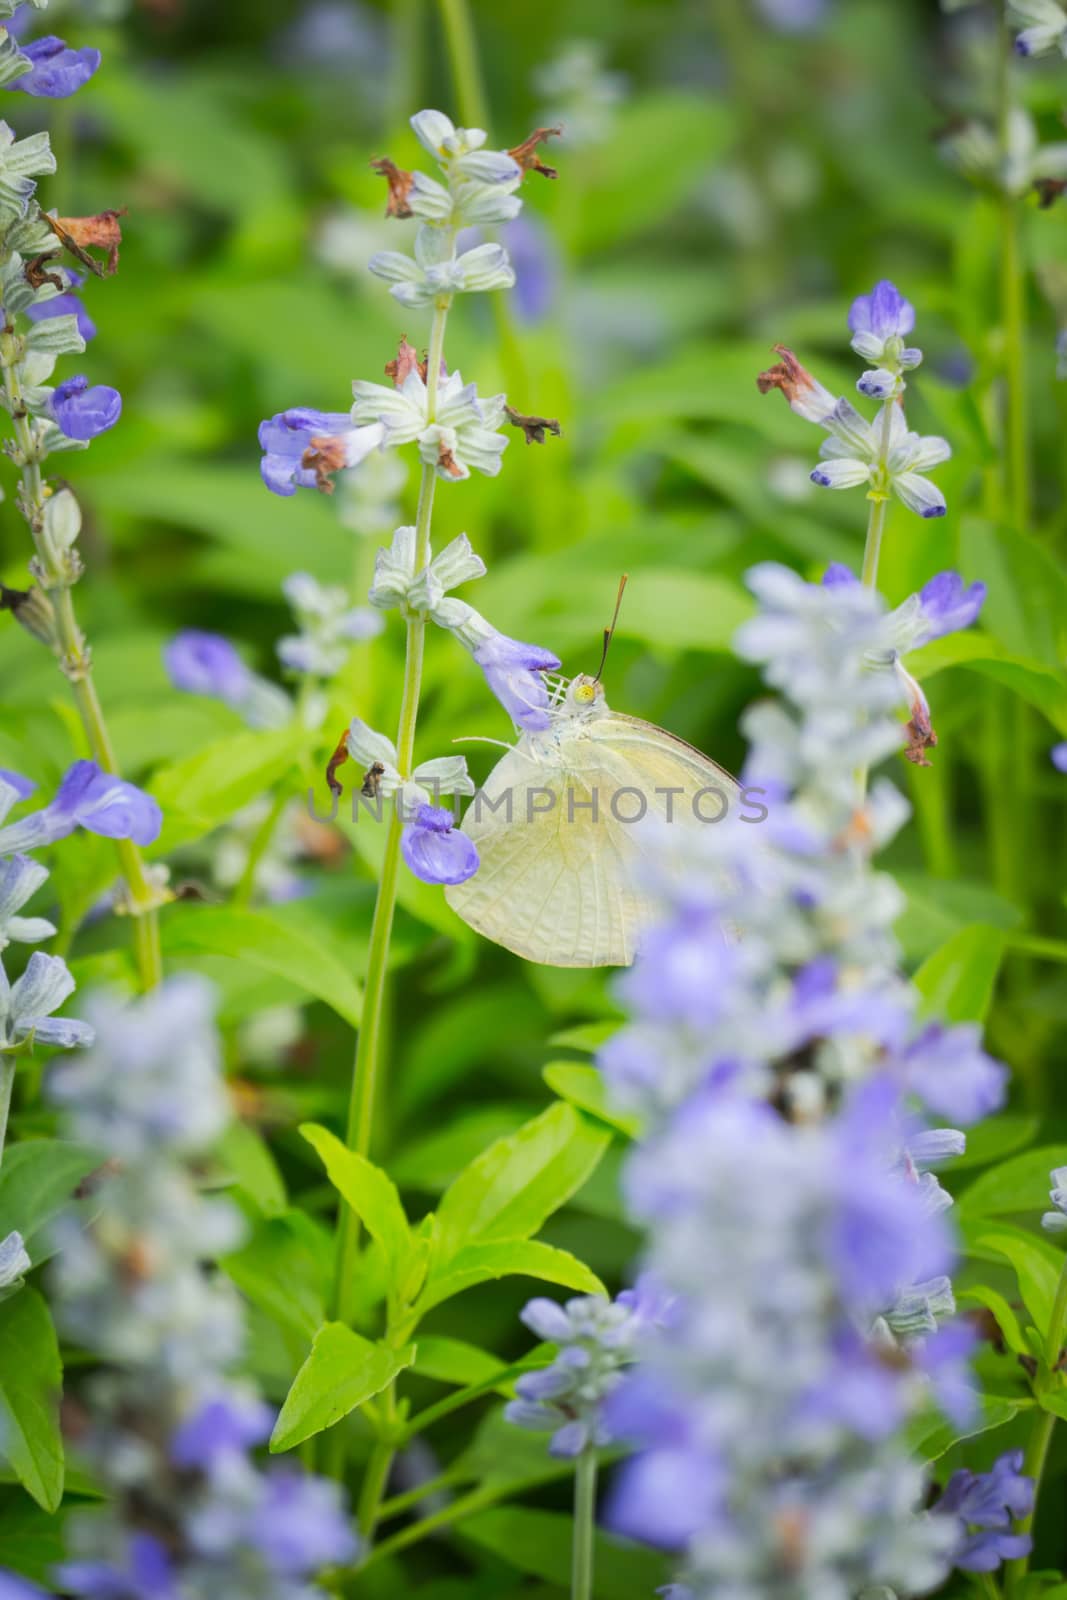 butterfly on flower, Blur flower background